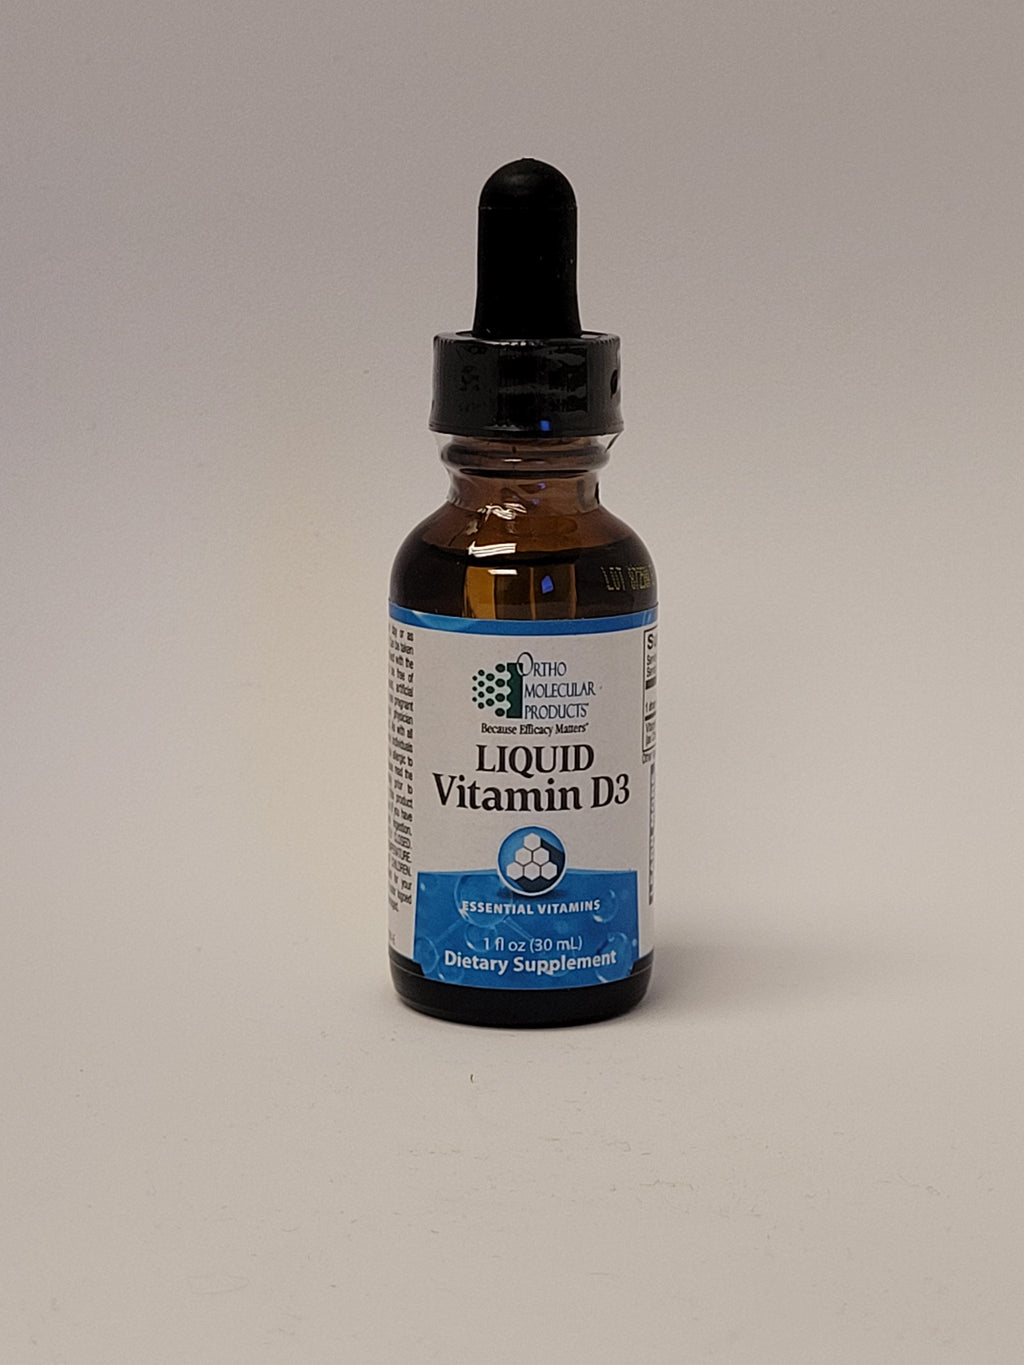 Vitamin D3 Liquid by Ortho Molecular